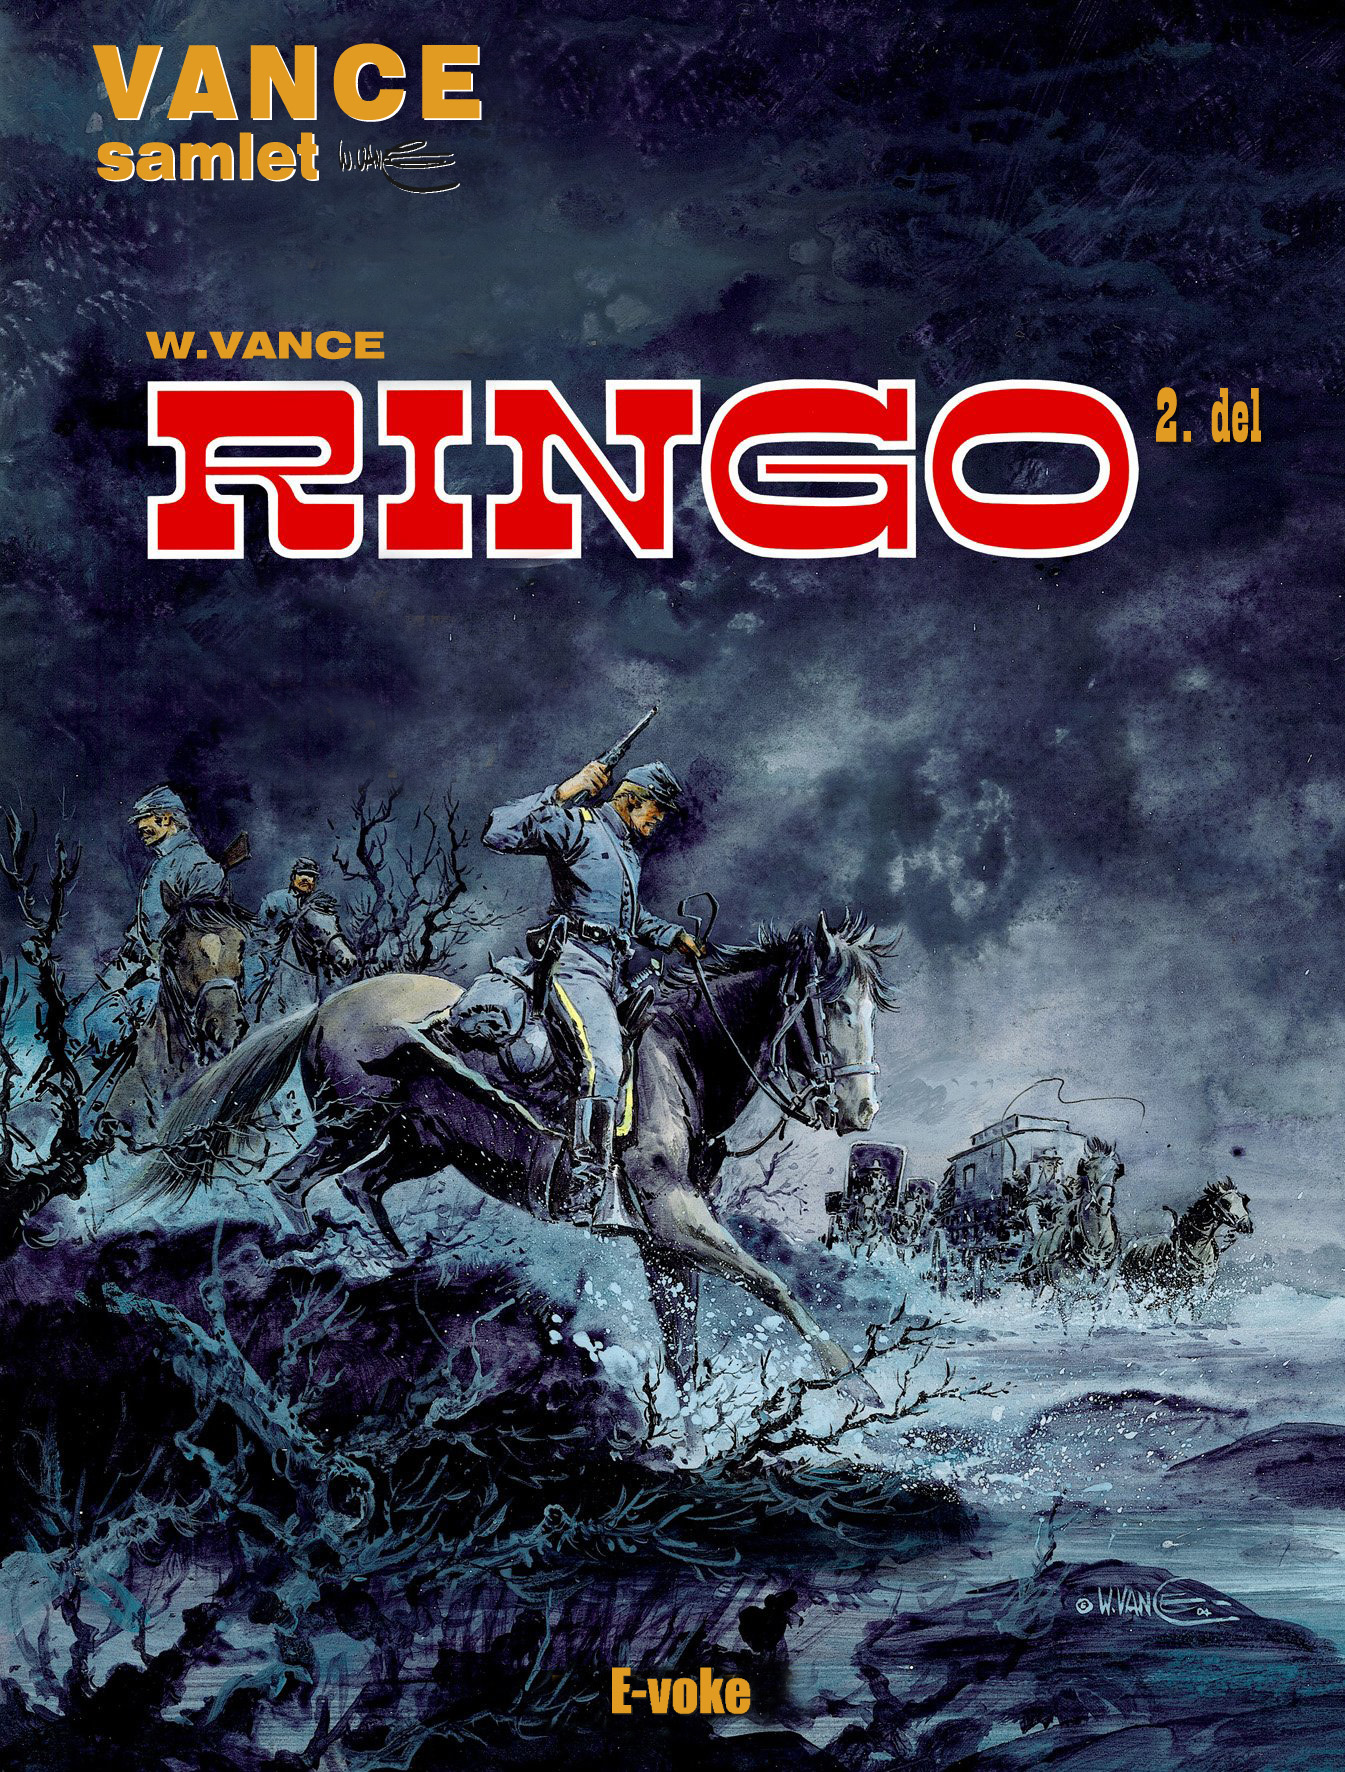 Vance samlet: Ringo 2 – udkommer oktober